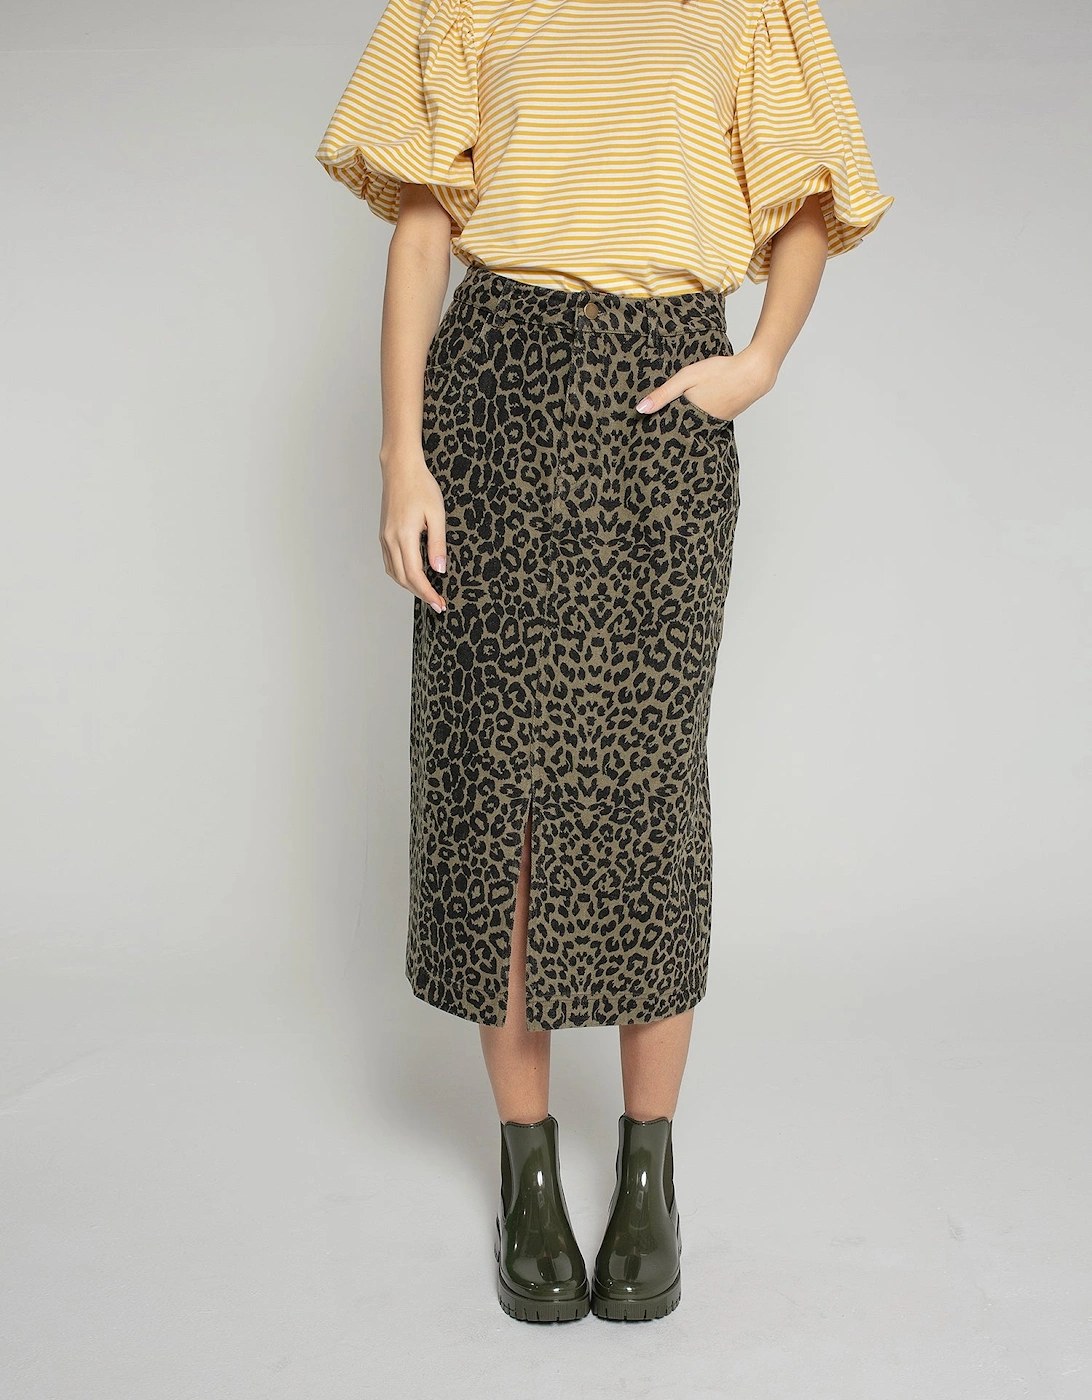 Frankie Denim Skirt in Khaki Leopard Print